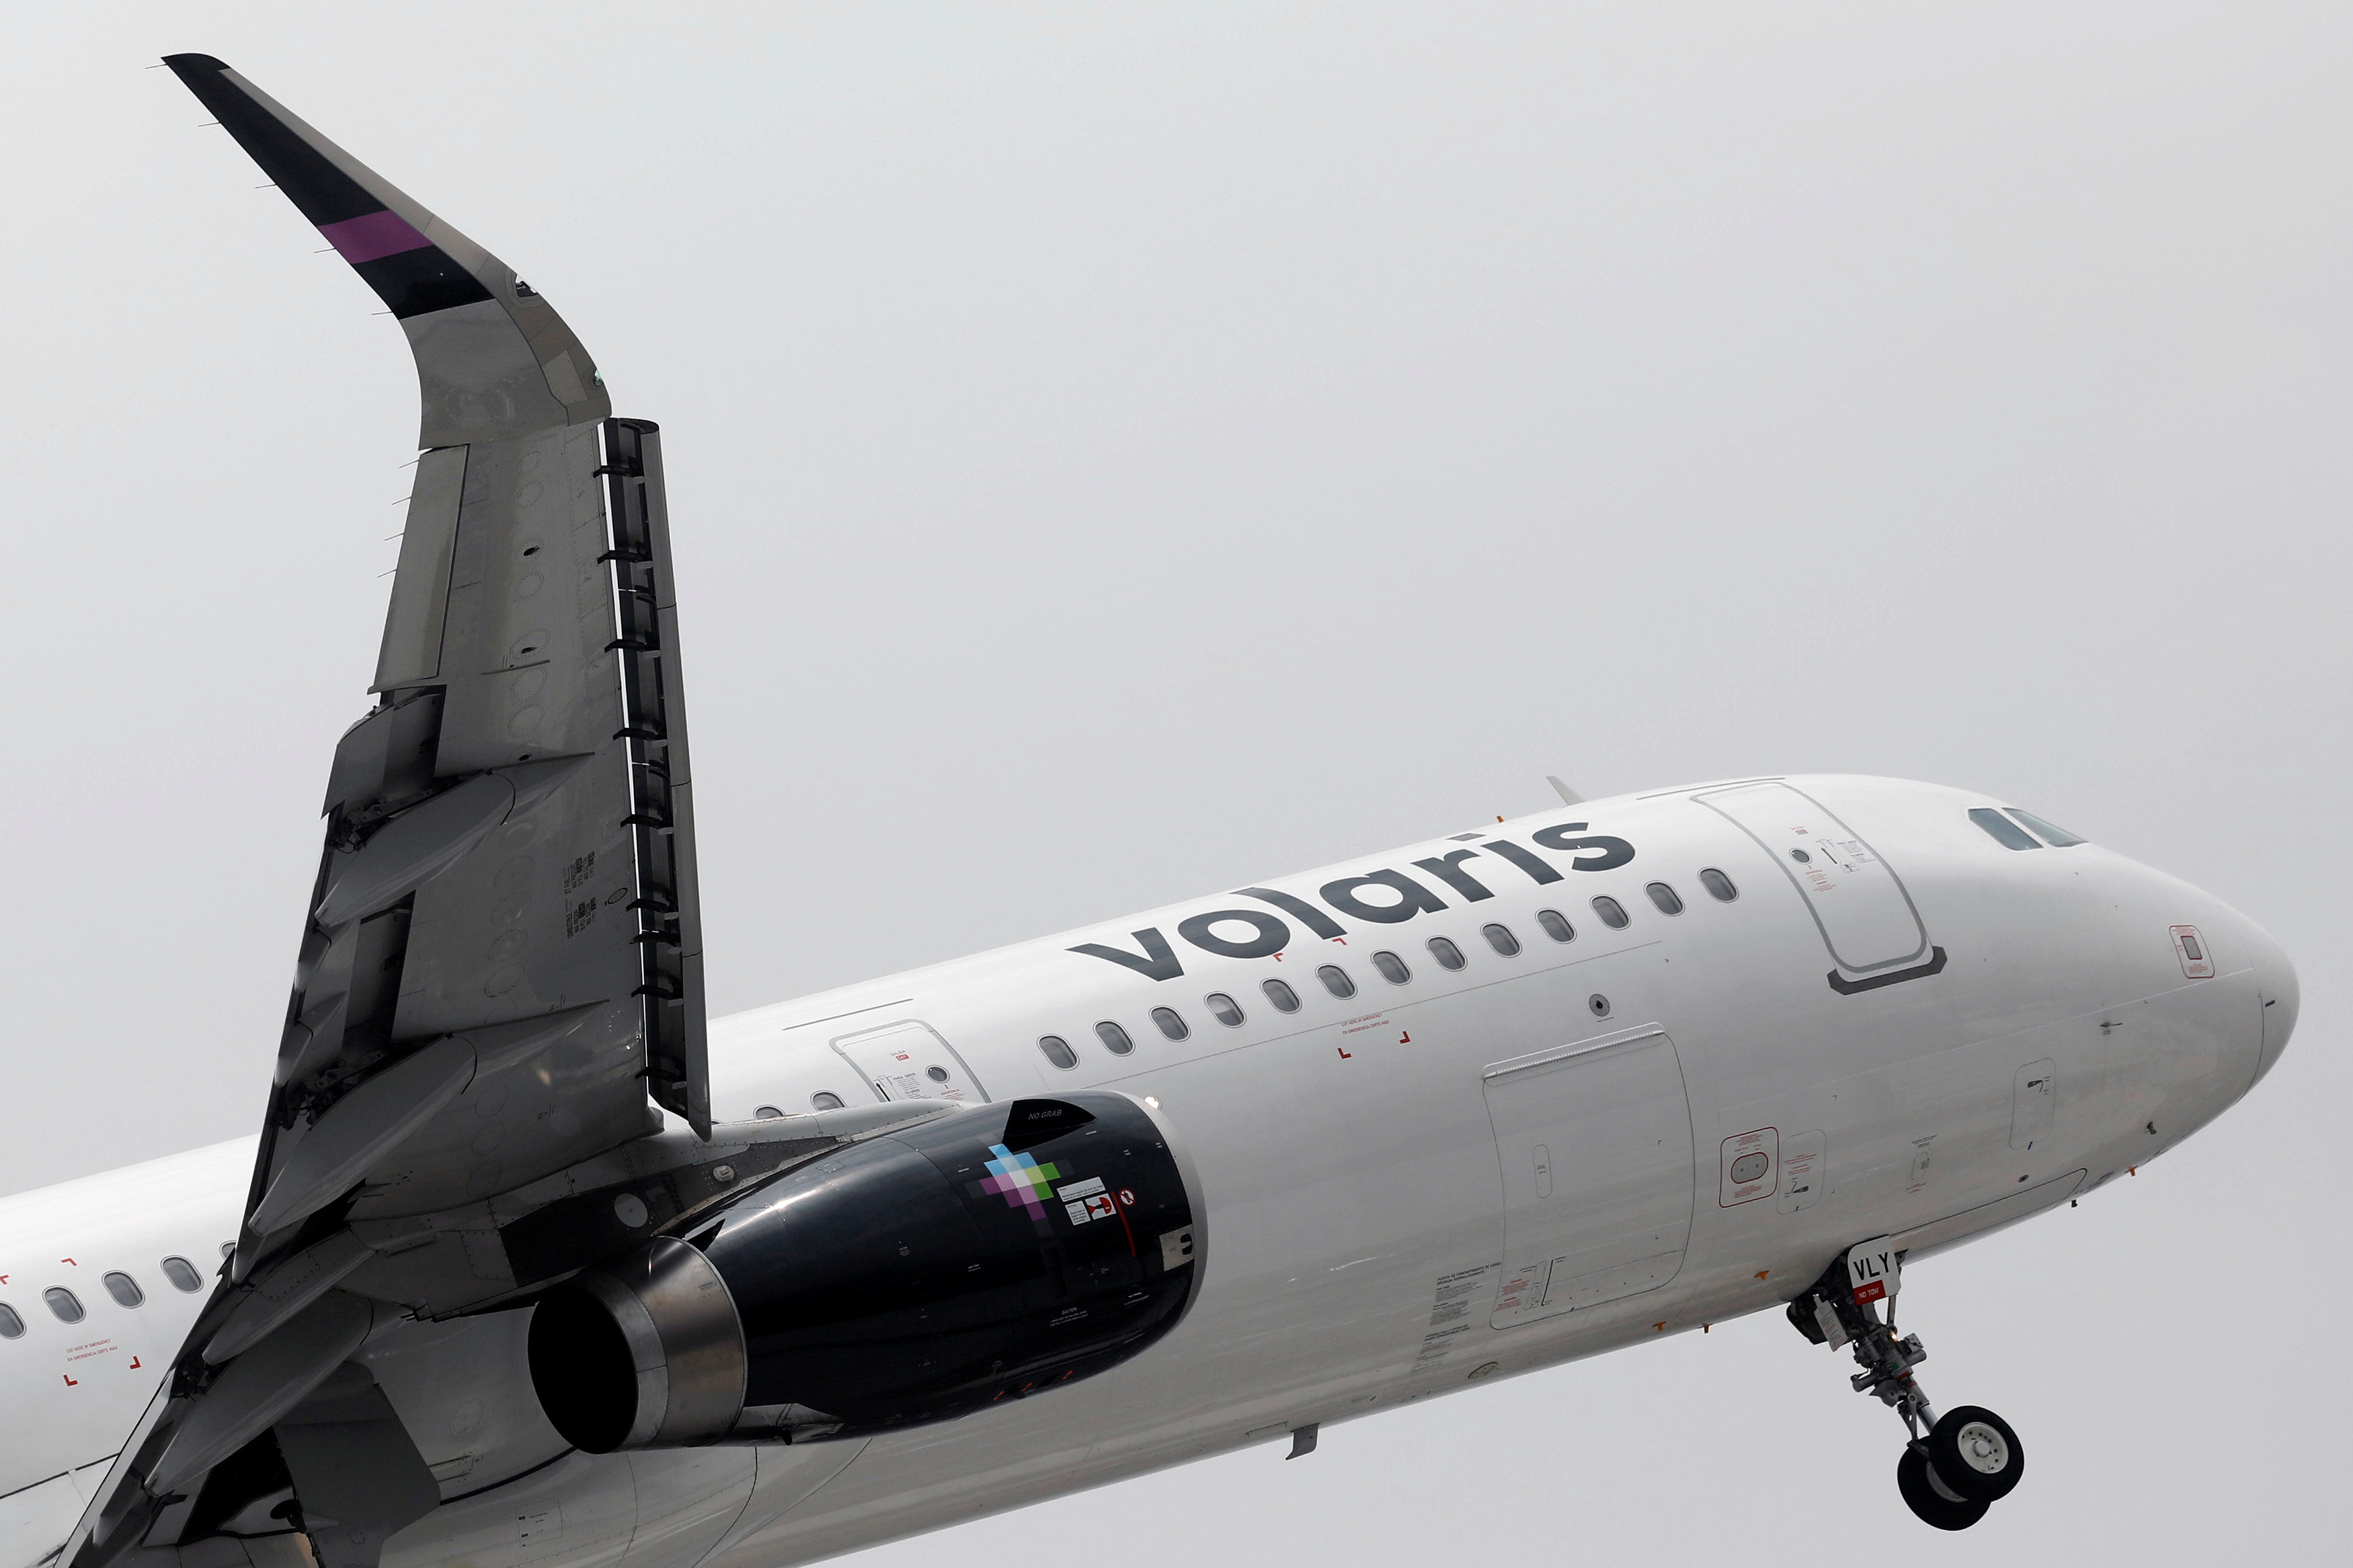 A Volaris aeroplane prepares to land on the airstrip at Benito Juarez international airport in Mexico City